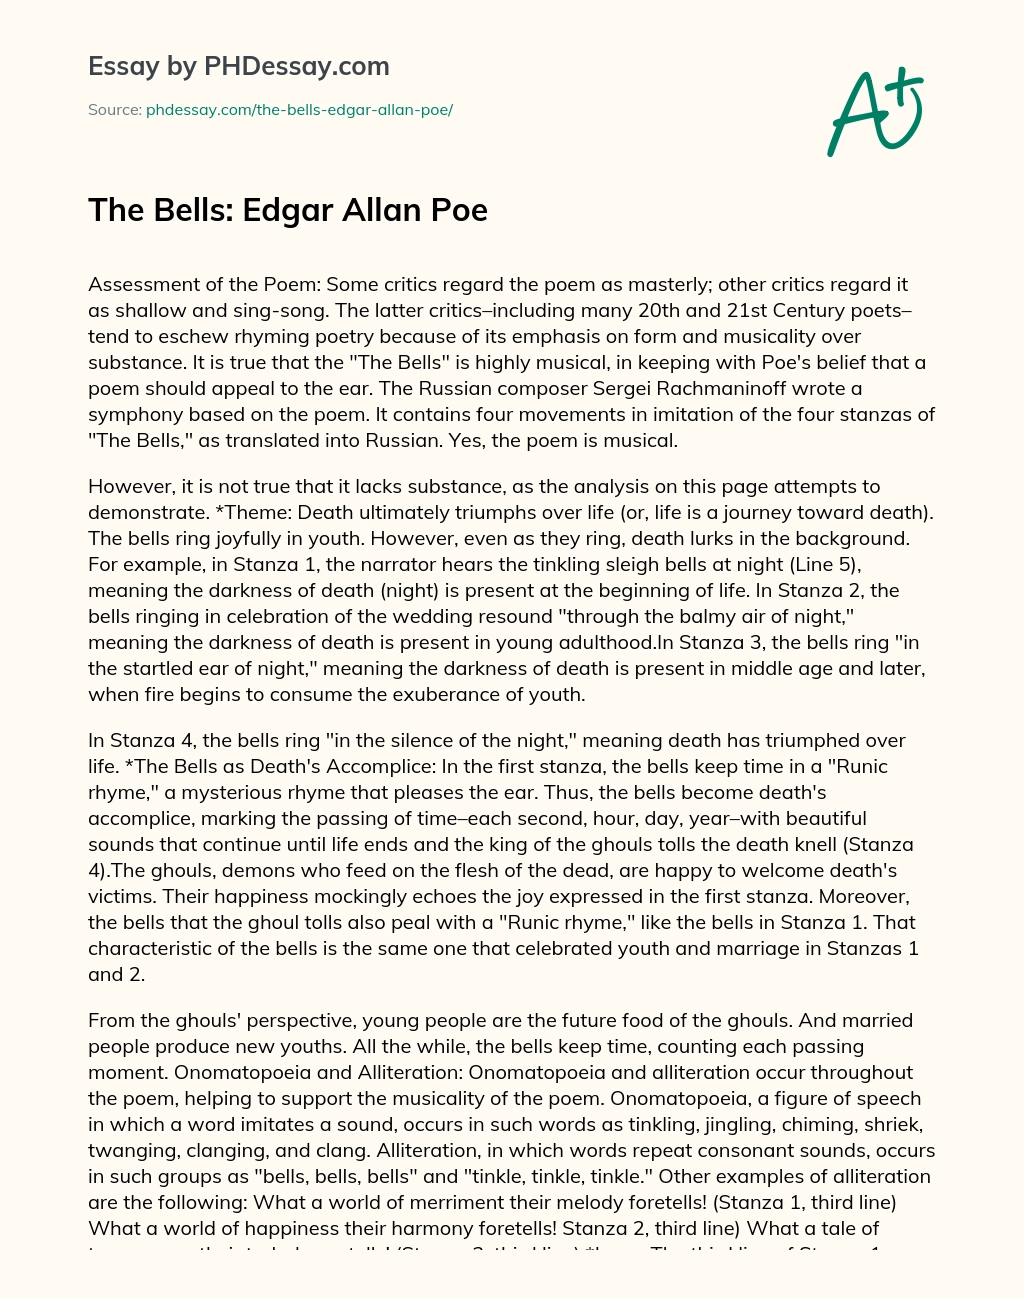 thesis statement on edgar allan poe